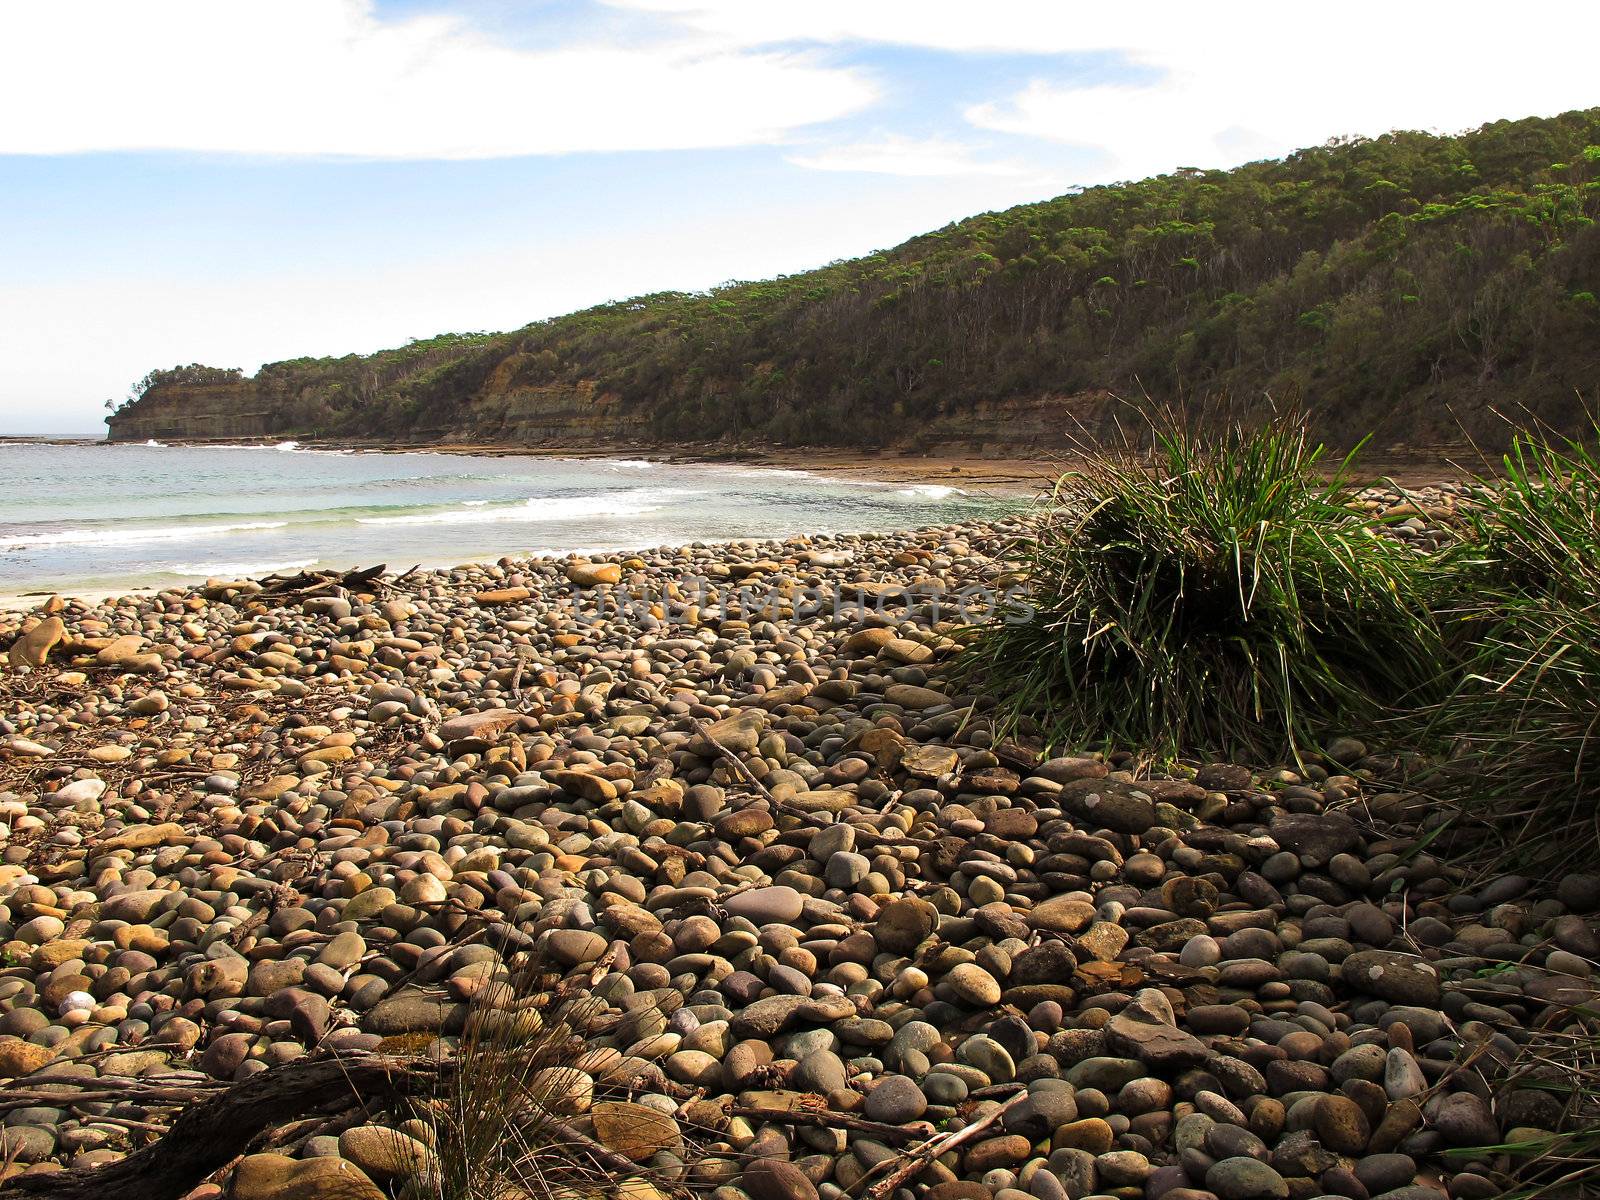 Wild shore in Australia by Arrxxx